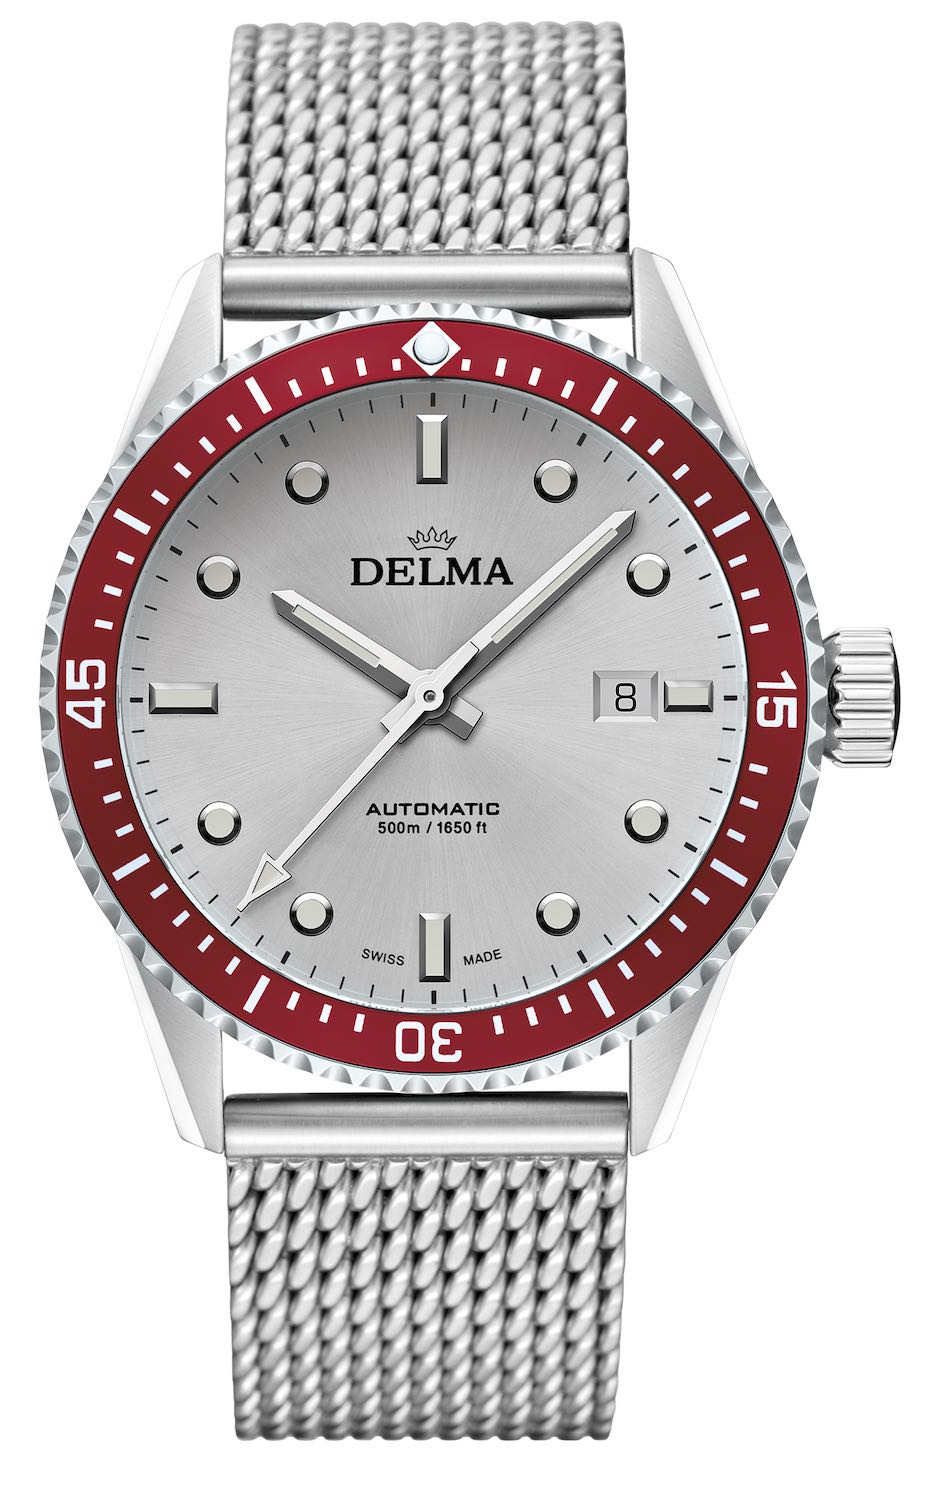 Delma Cayman Automatic - Value Proposition Diver - 1